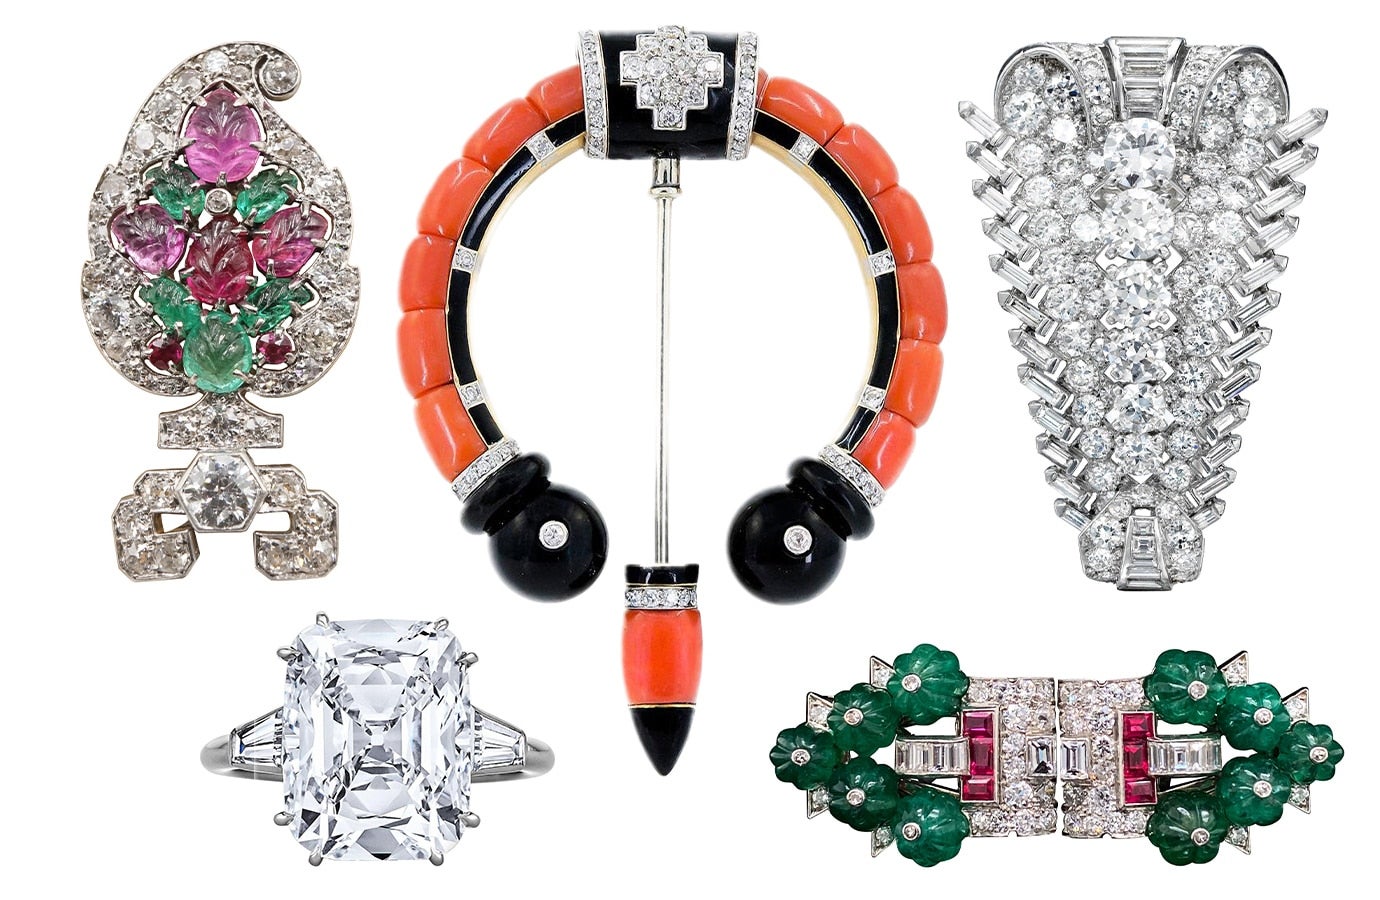 Cartier: The Jeweler Who Helped Define Art Deco